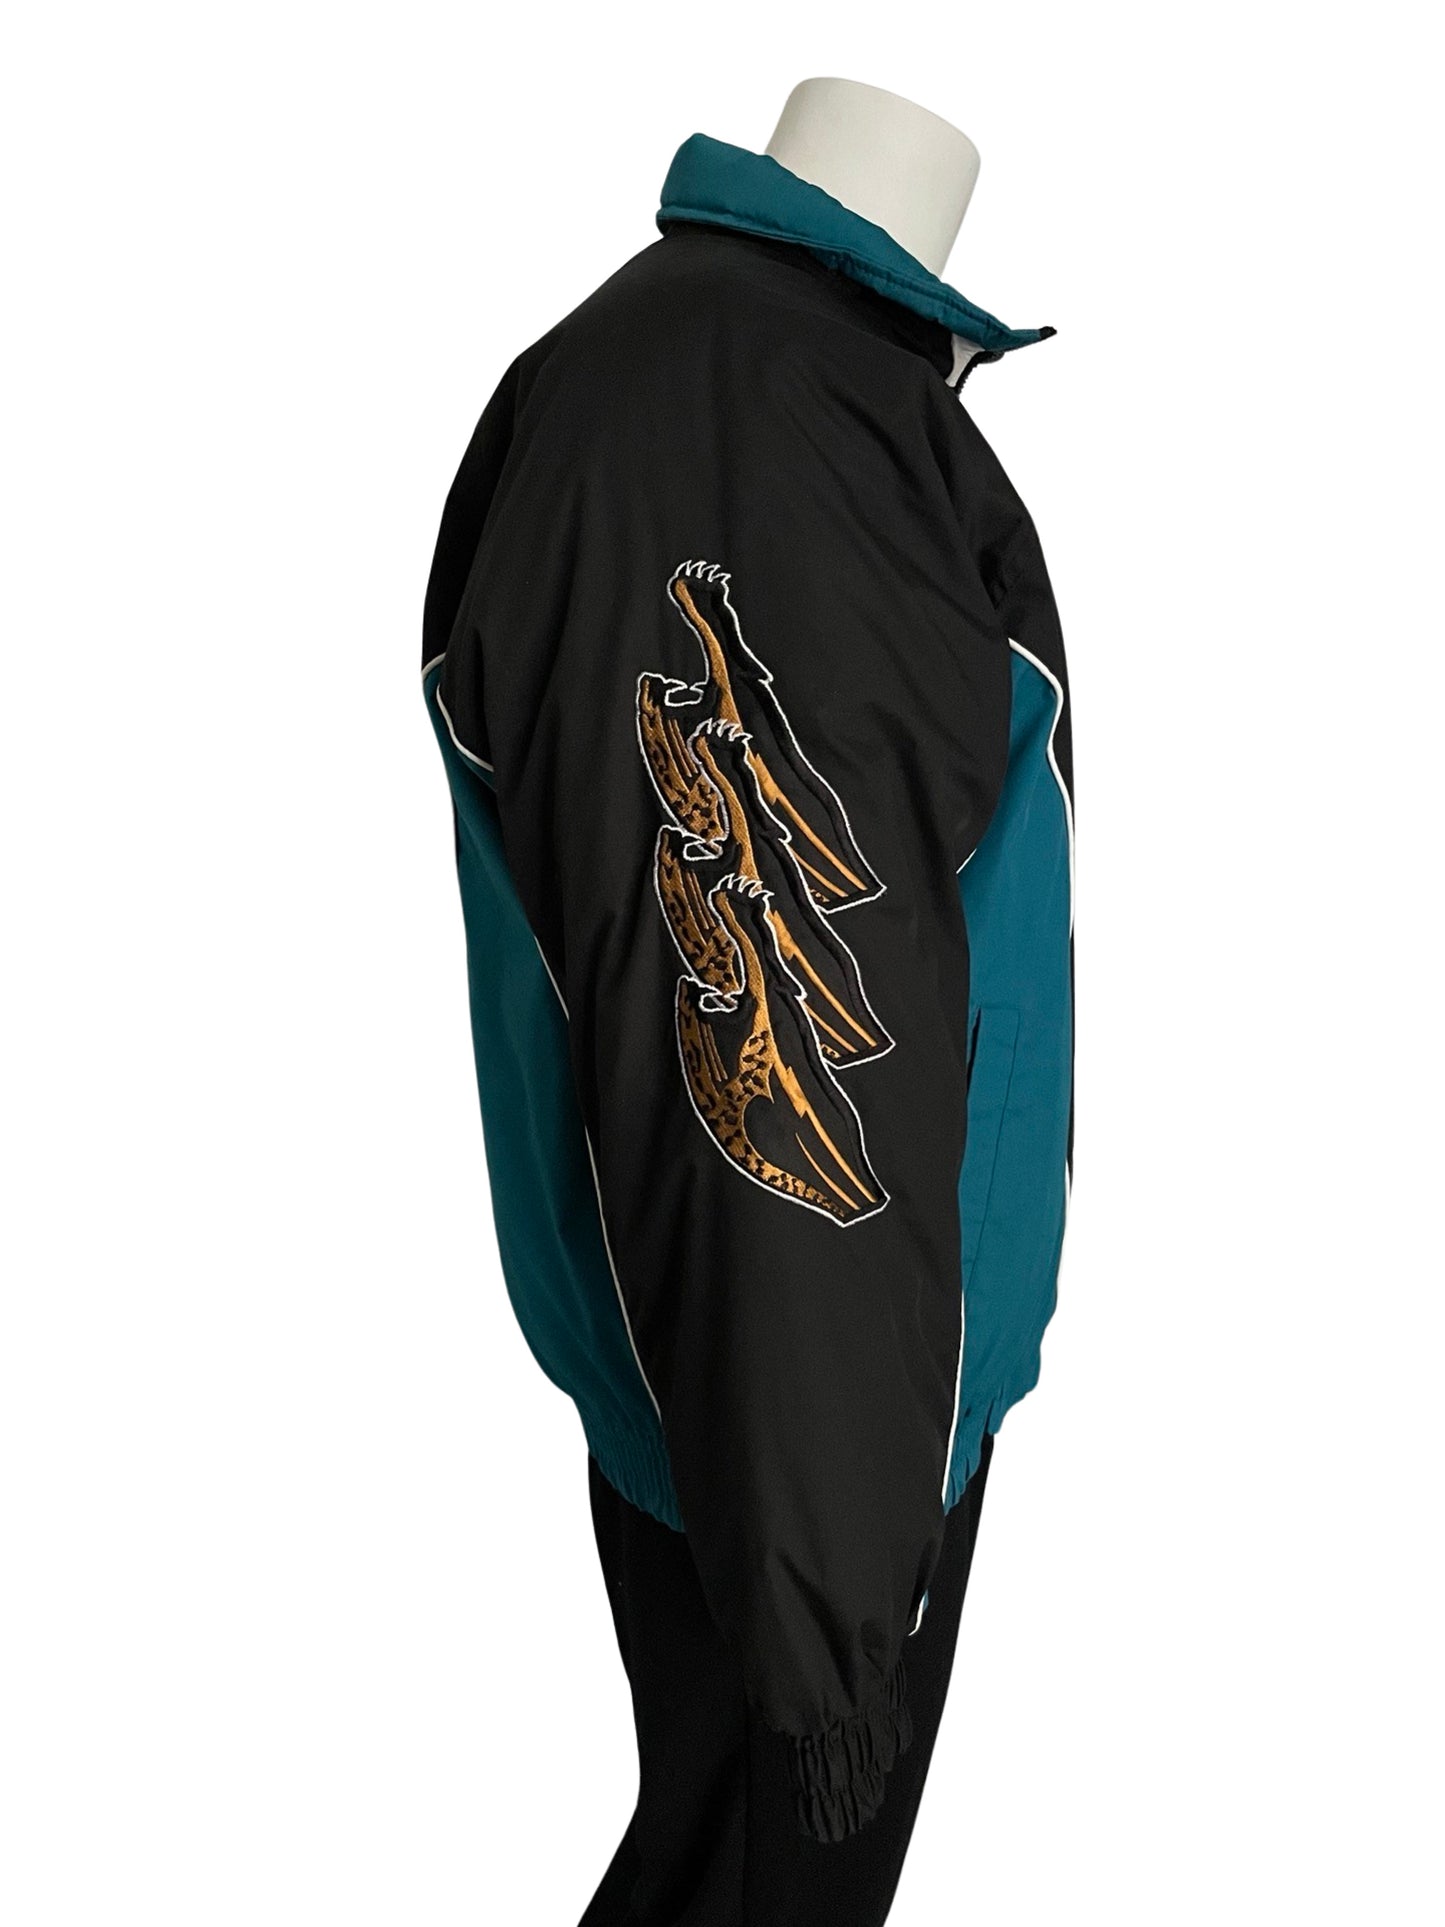 Vintage Jacksonville Jaguars banned logo PRO PLAYER by Daniel Young jacket size LARGE